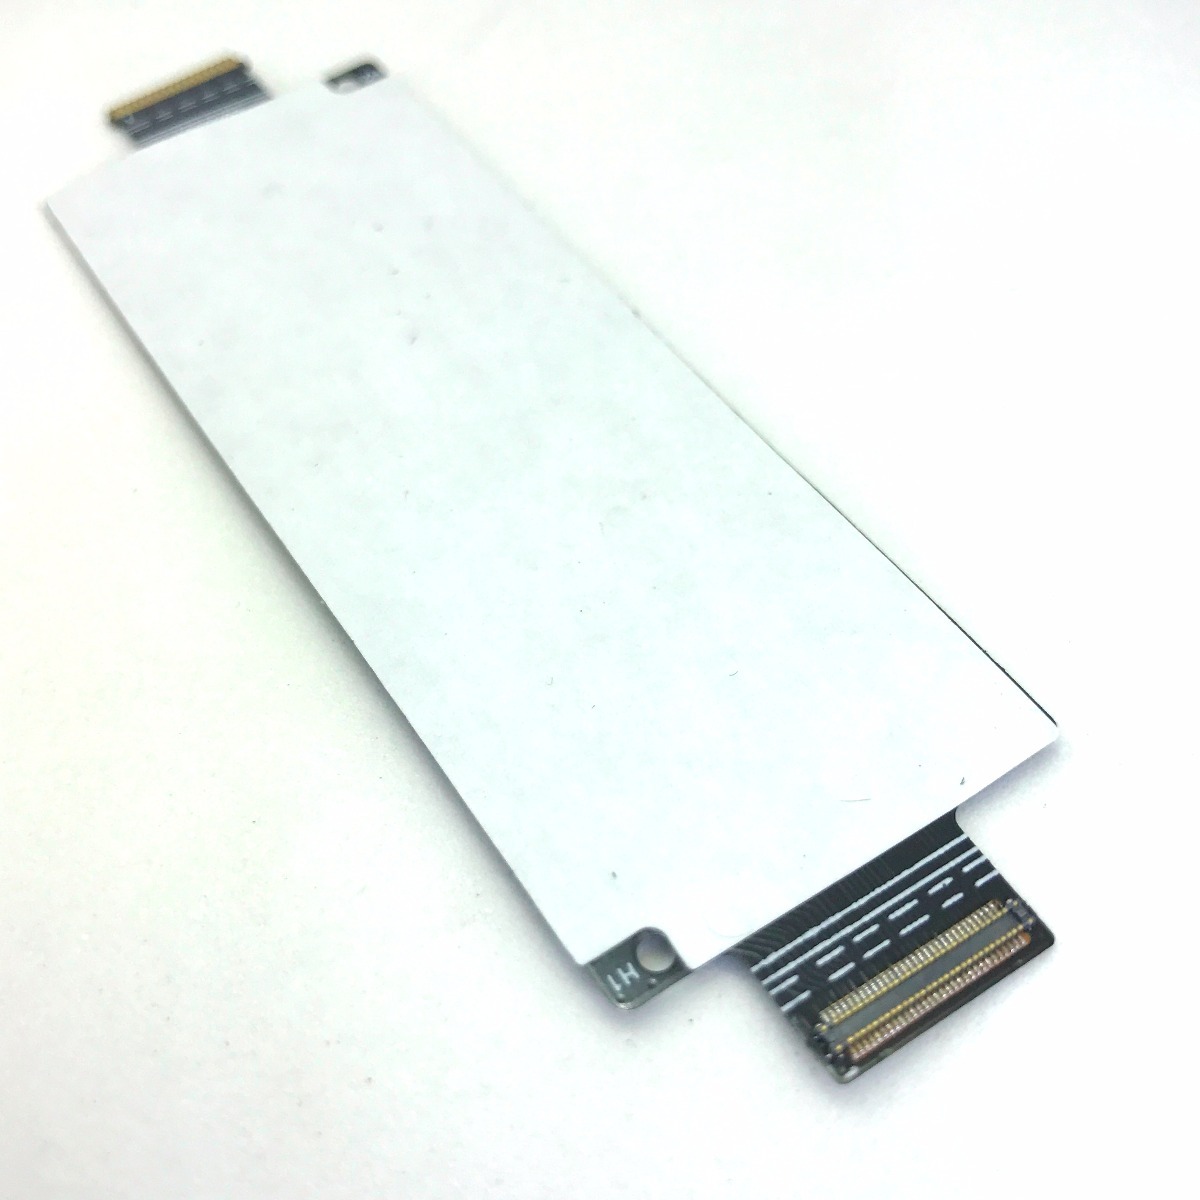 Flex Slot Conector Chip Sim Card Sd Asus Zenfone 2 Ze551ml 